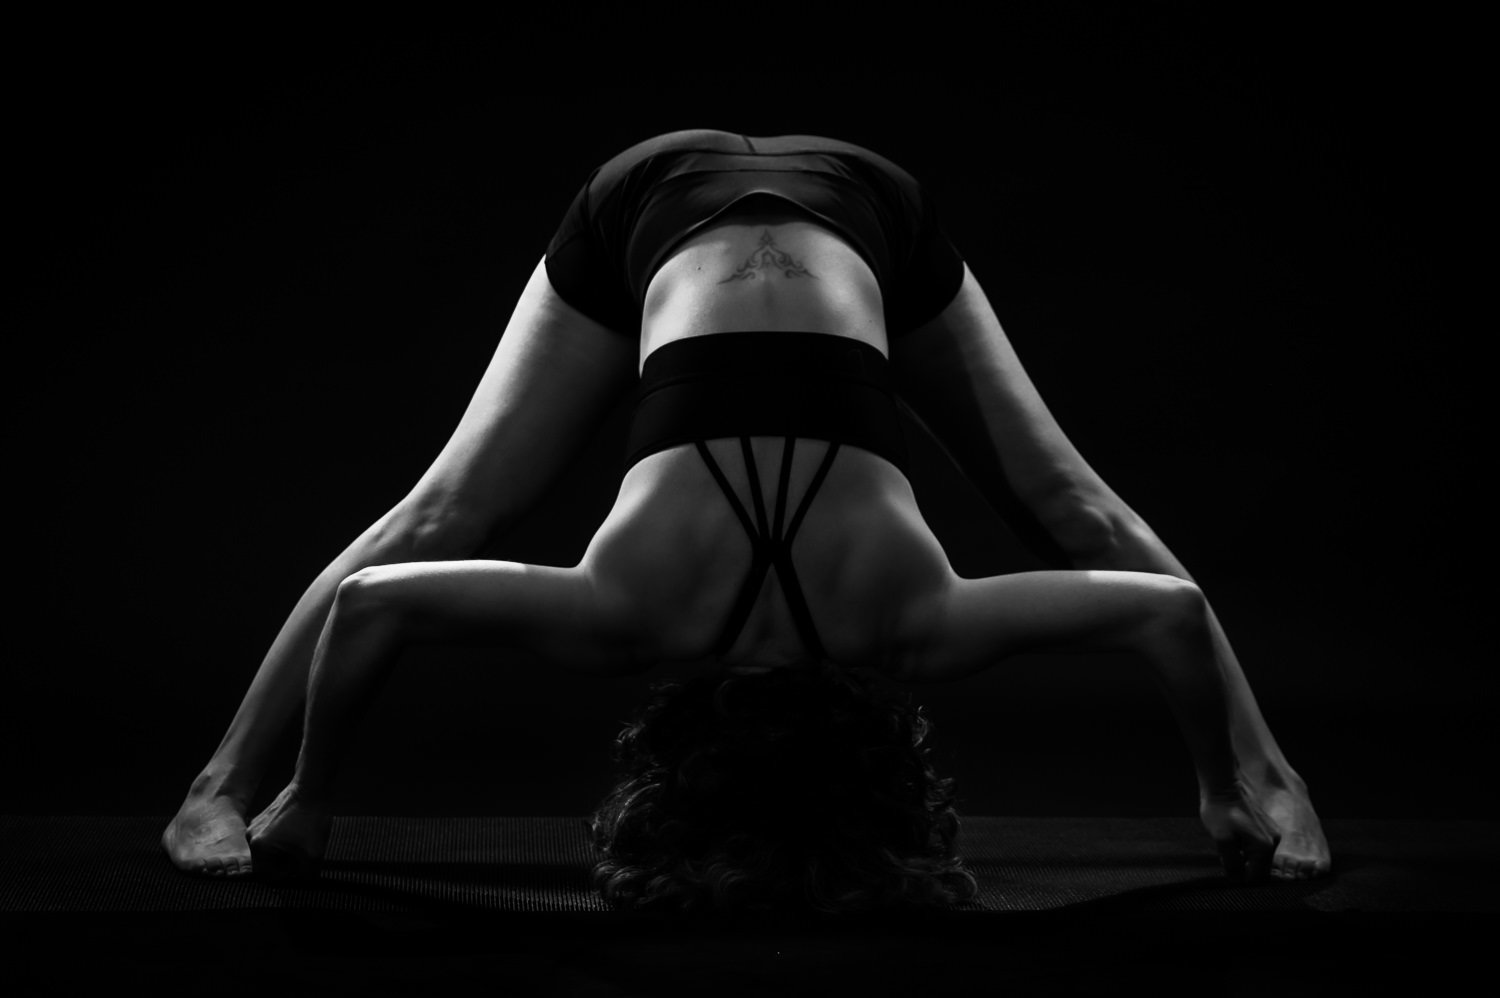 yoga-puurboudoir-artistiek-moody-zwart-wit-cfoto-caroline-10.jpg